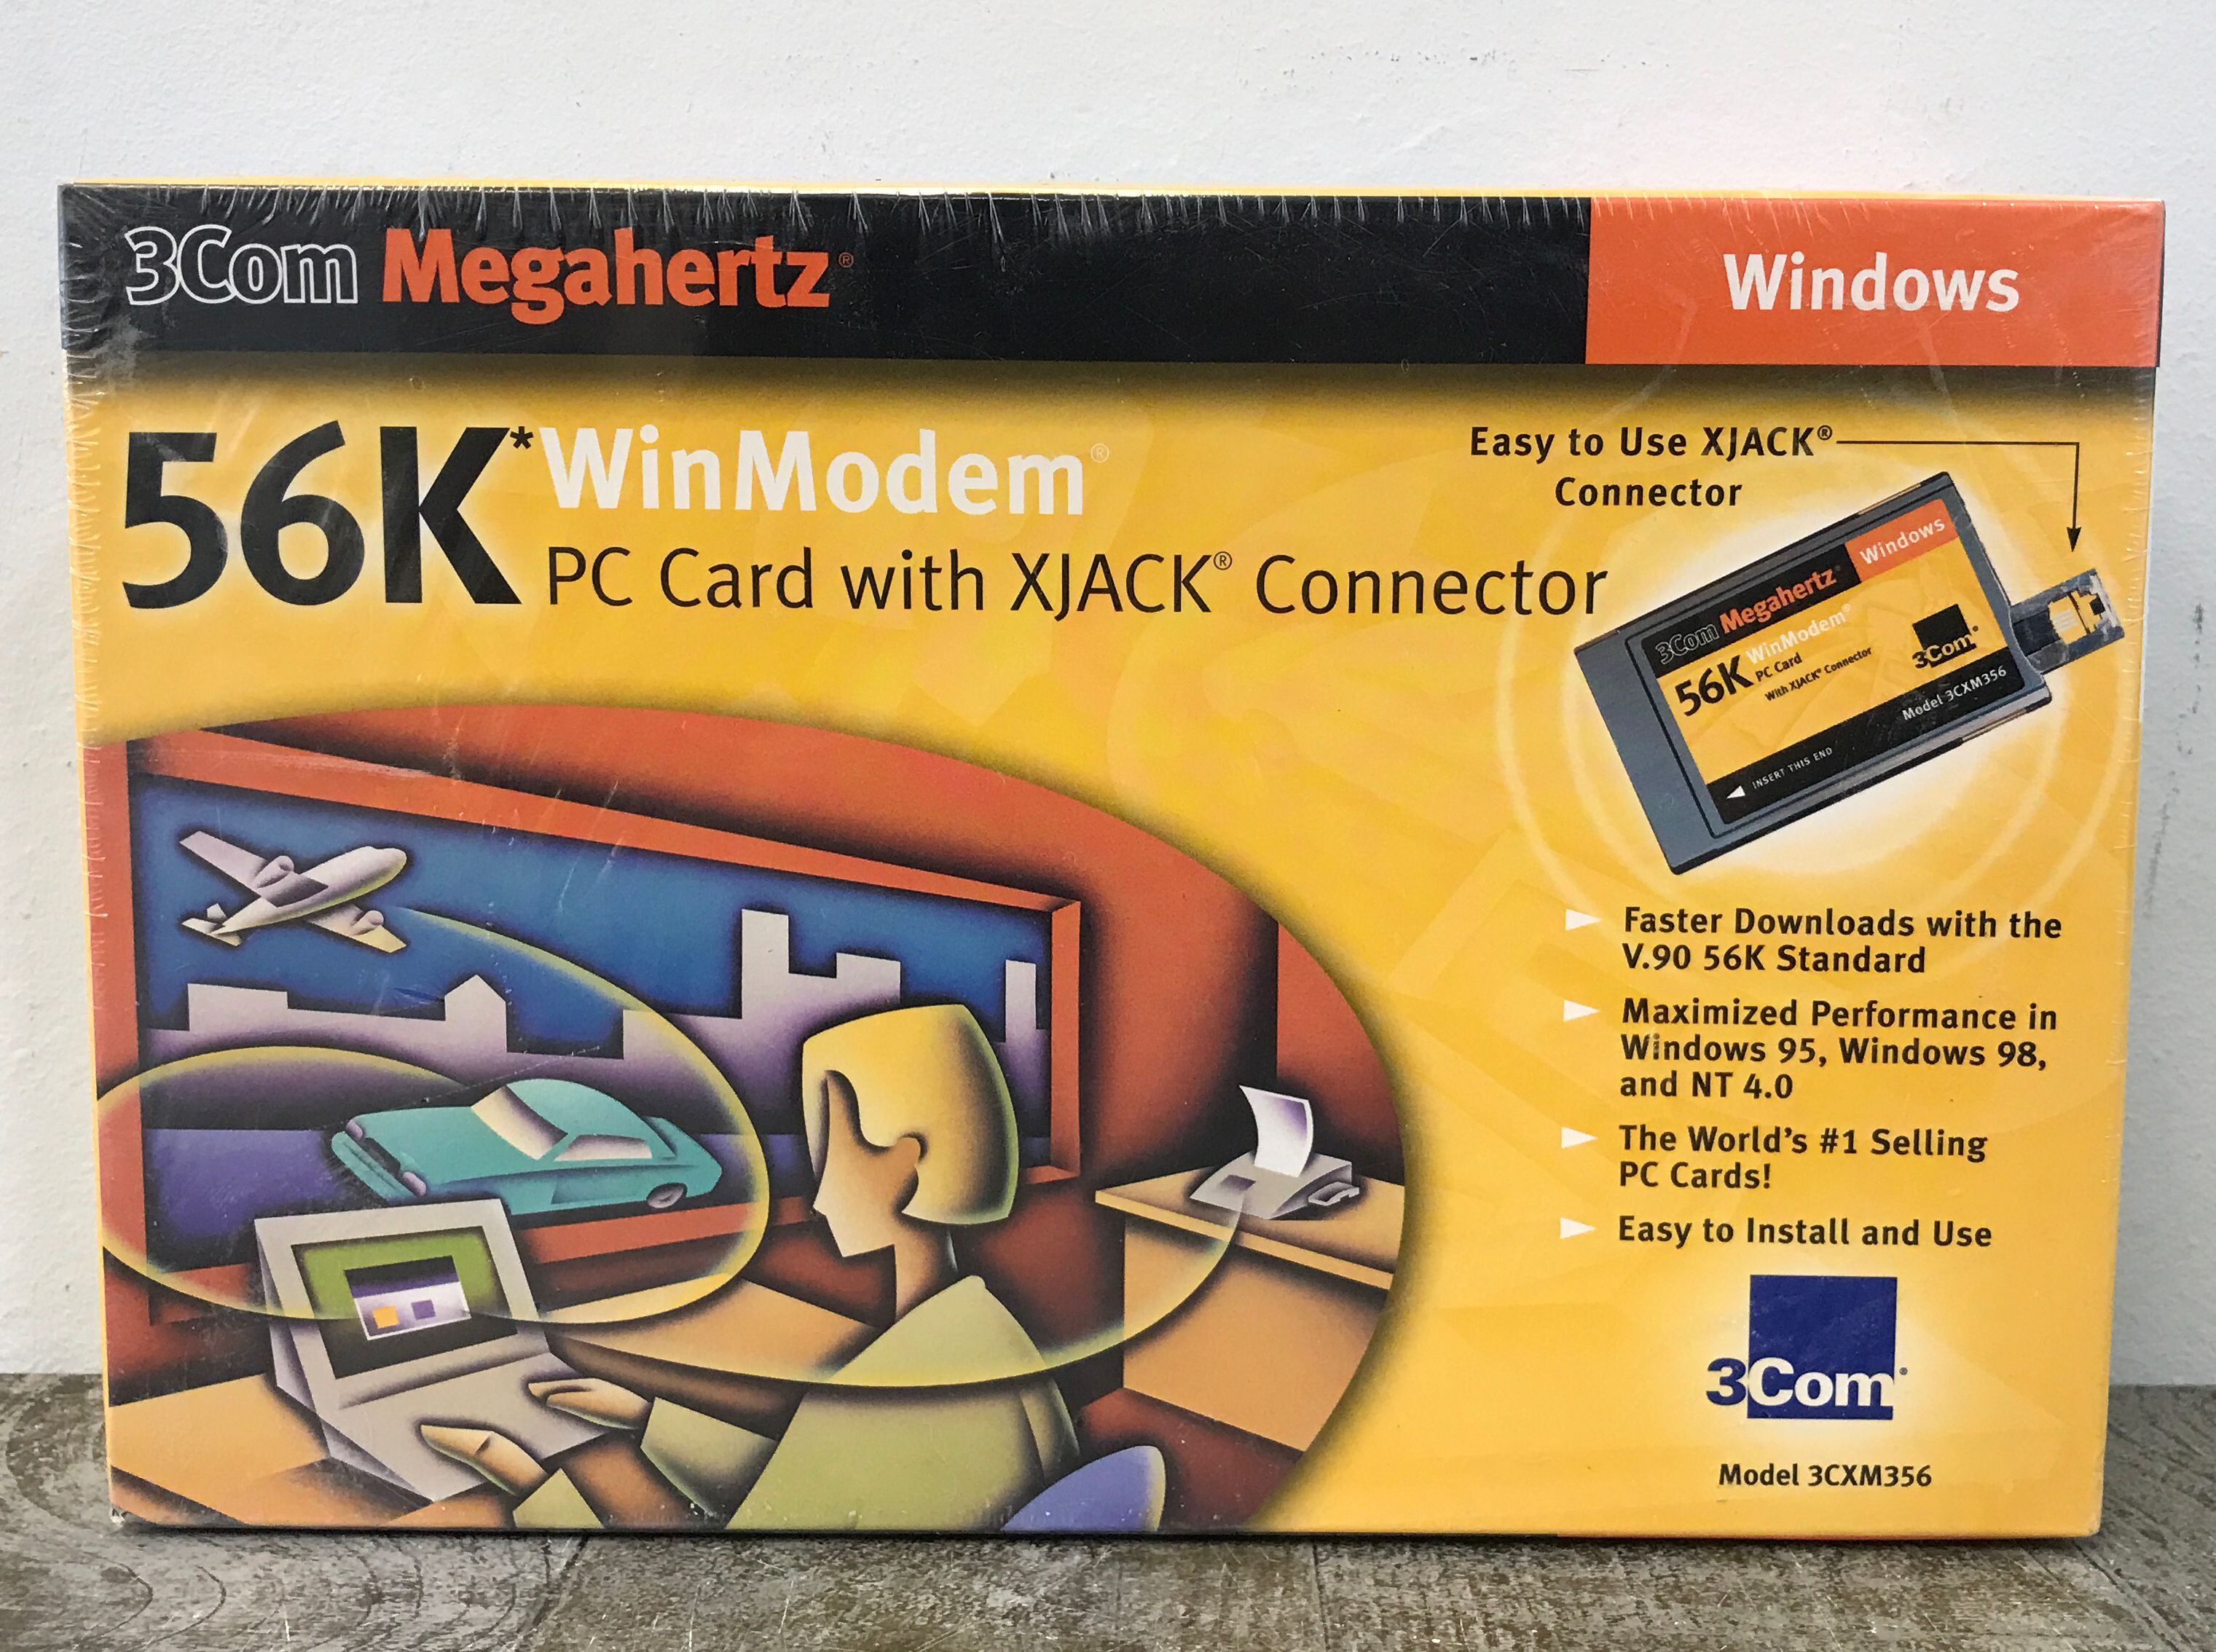 Windows 3com WinModem 56K PC Card with XJACK Connector